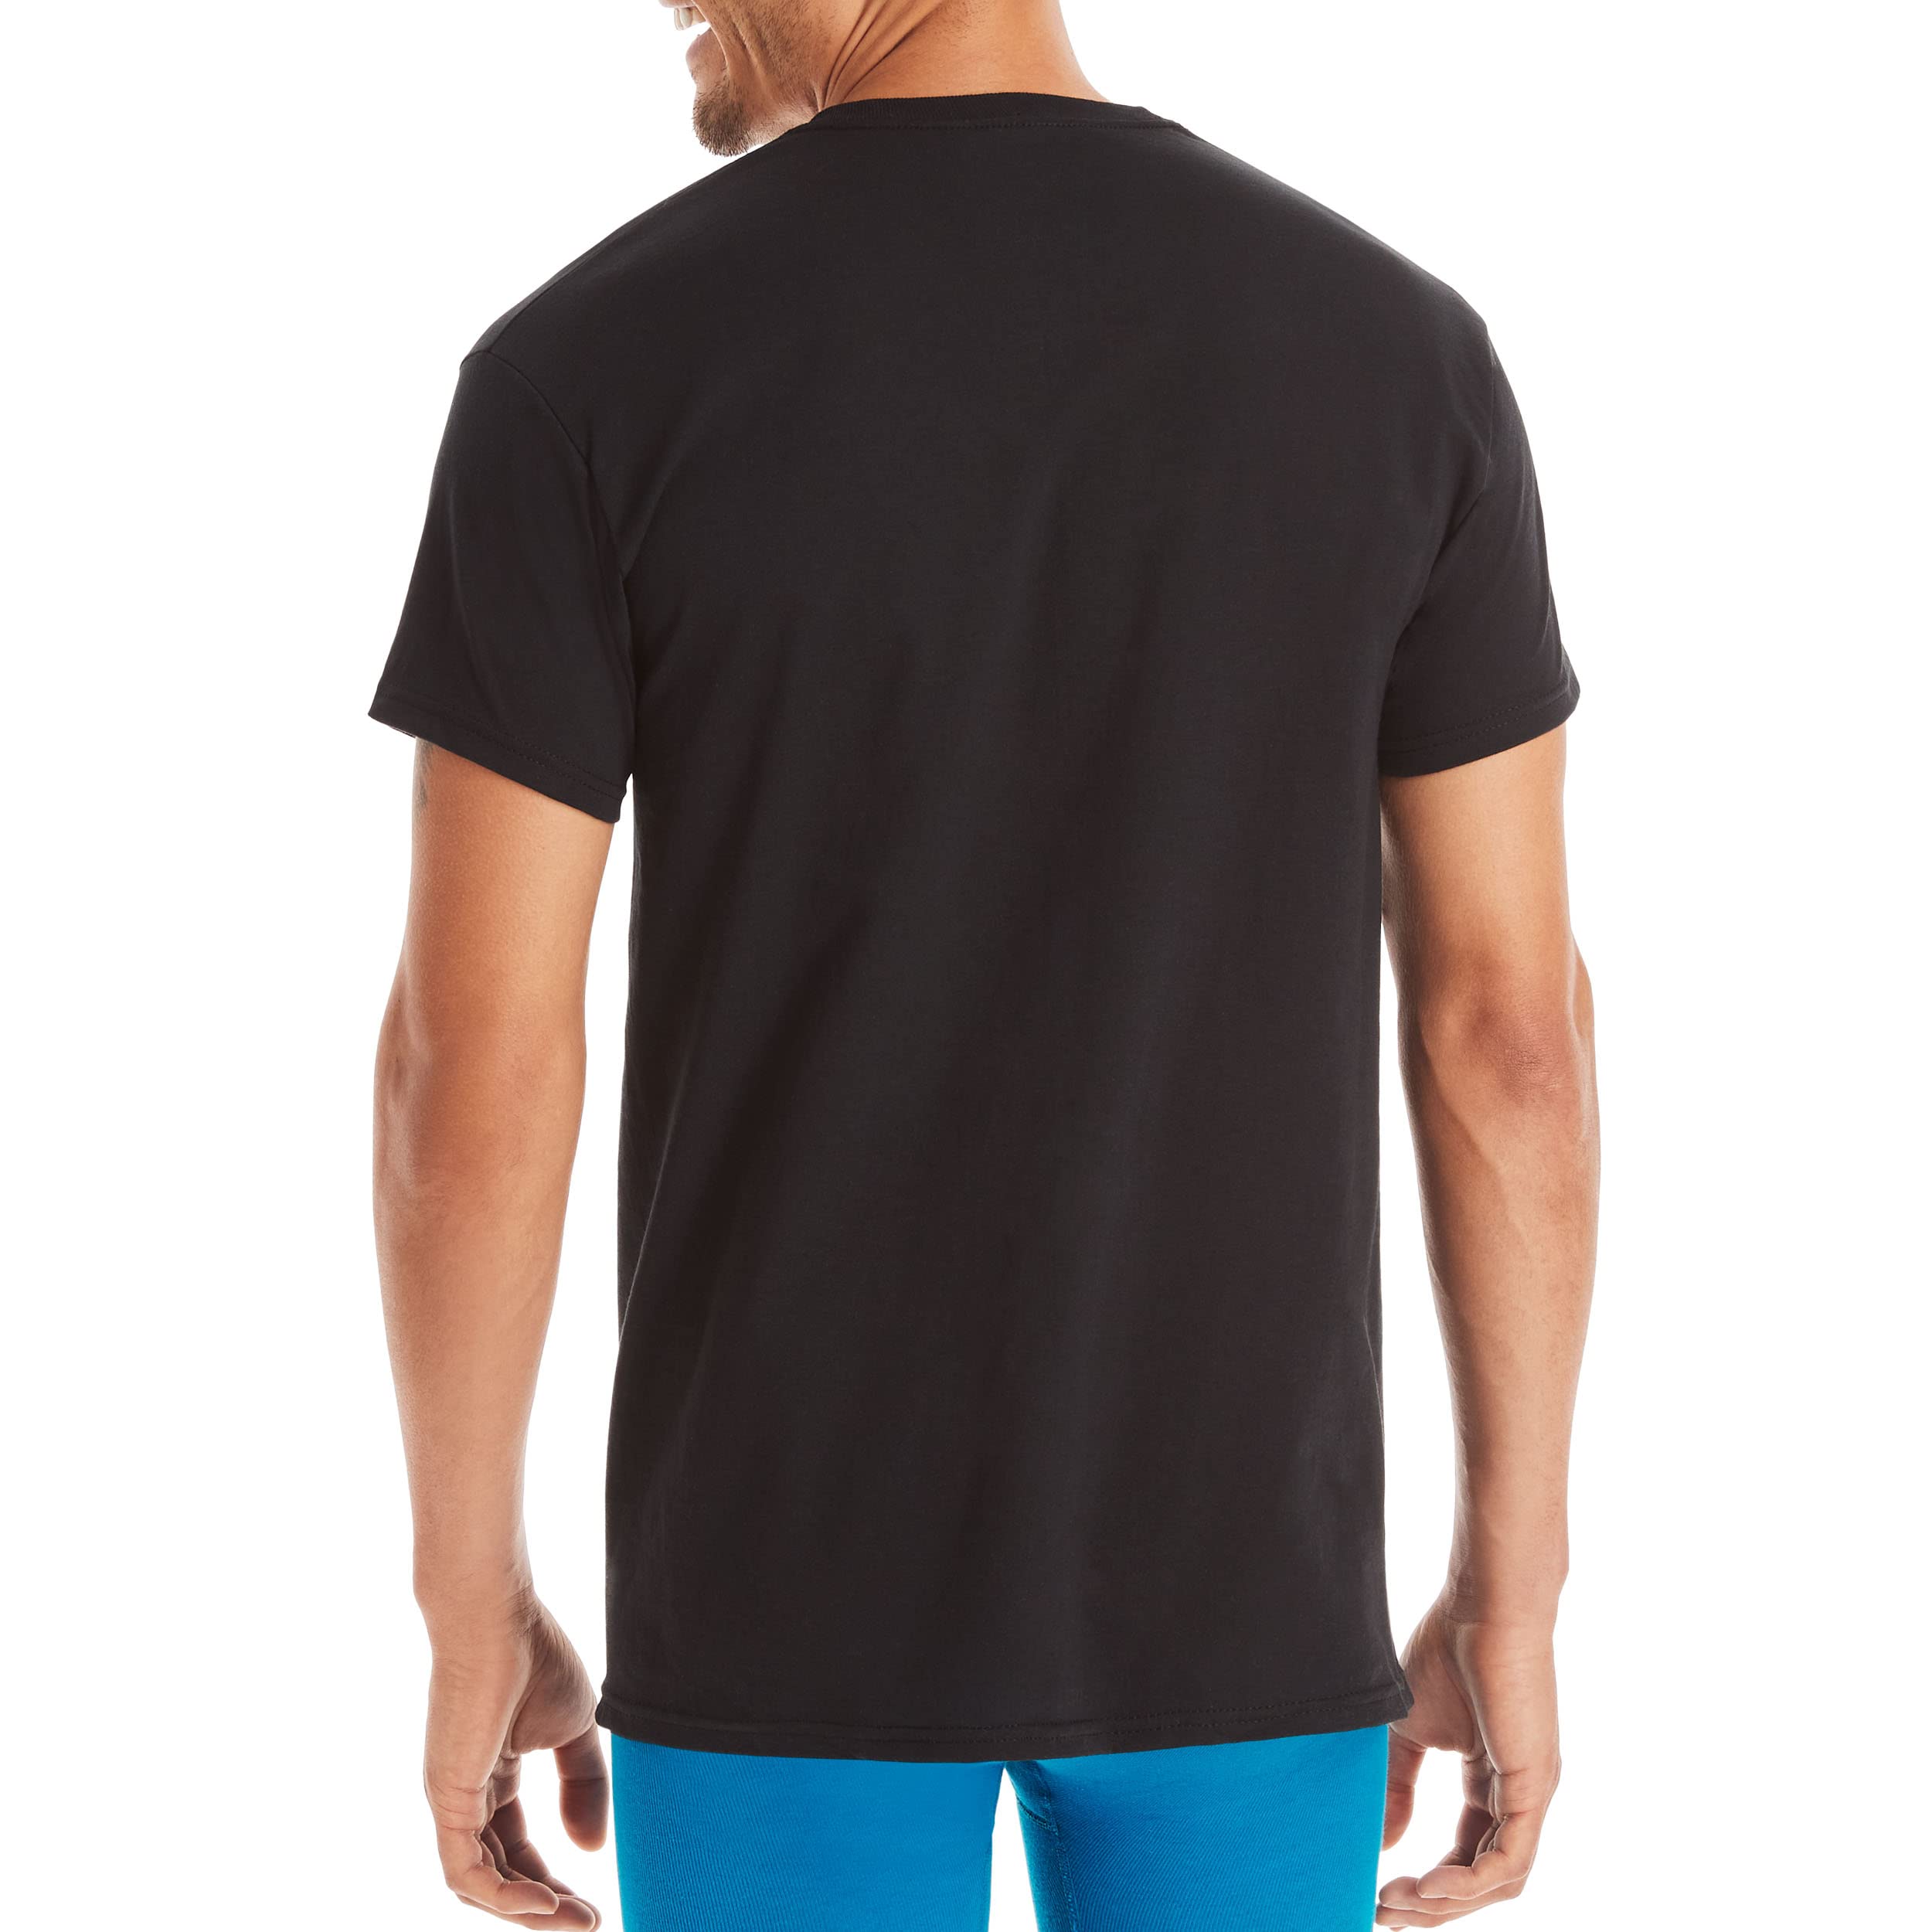 Hanes Men's Undershirts, Odor Control, Moisture-Wicking Tee Shirts, Multi-Packs